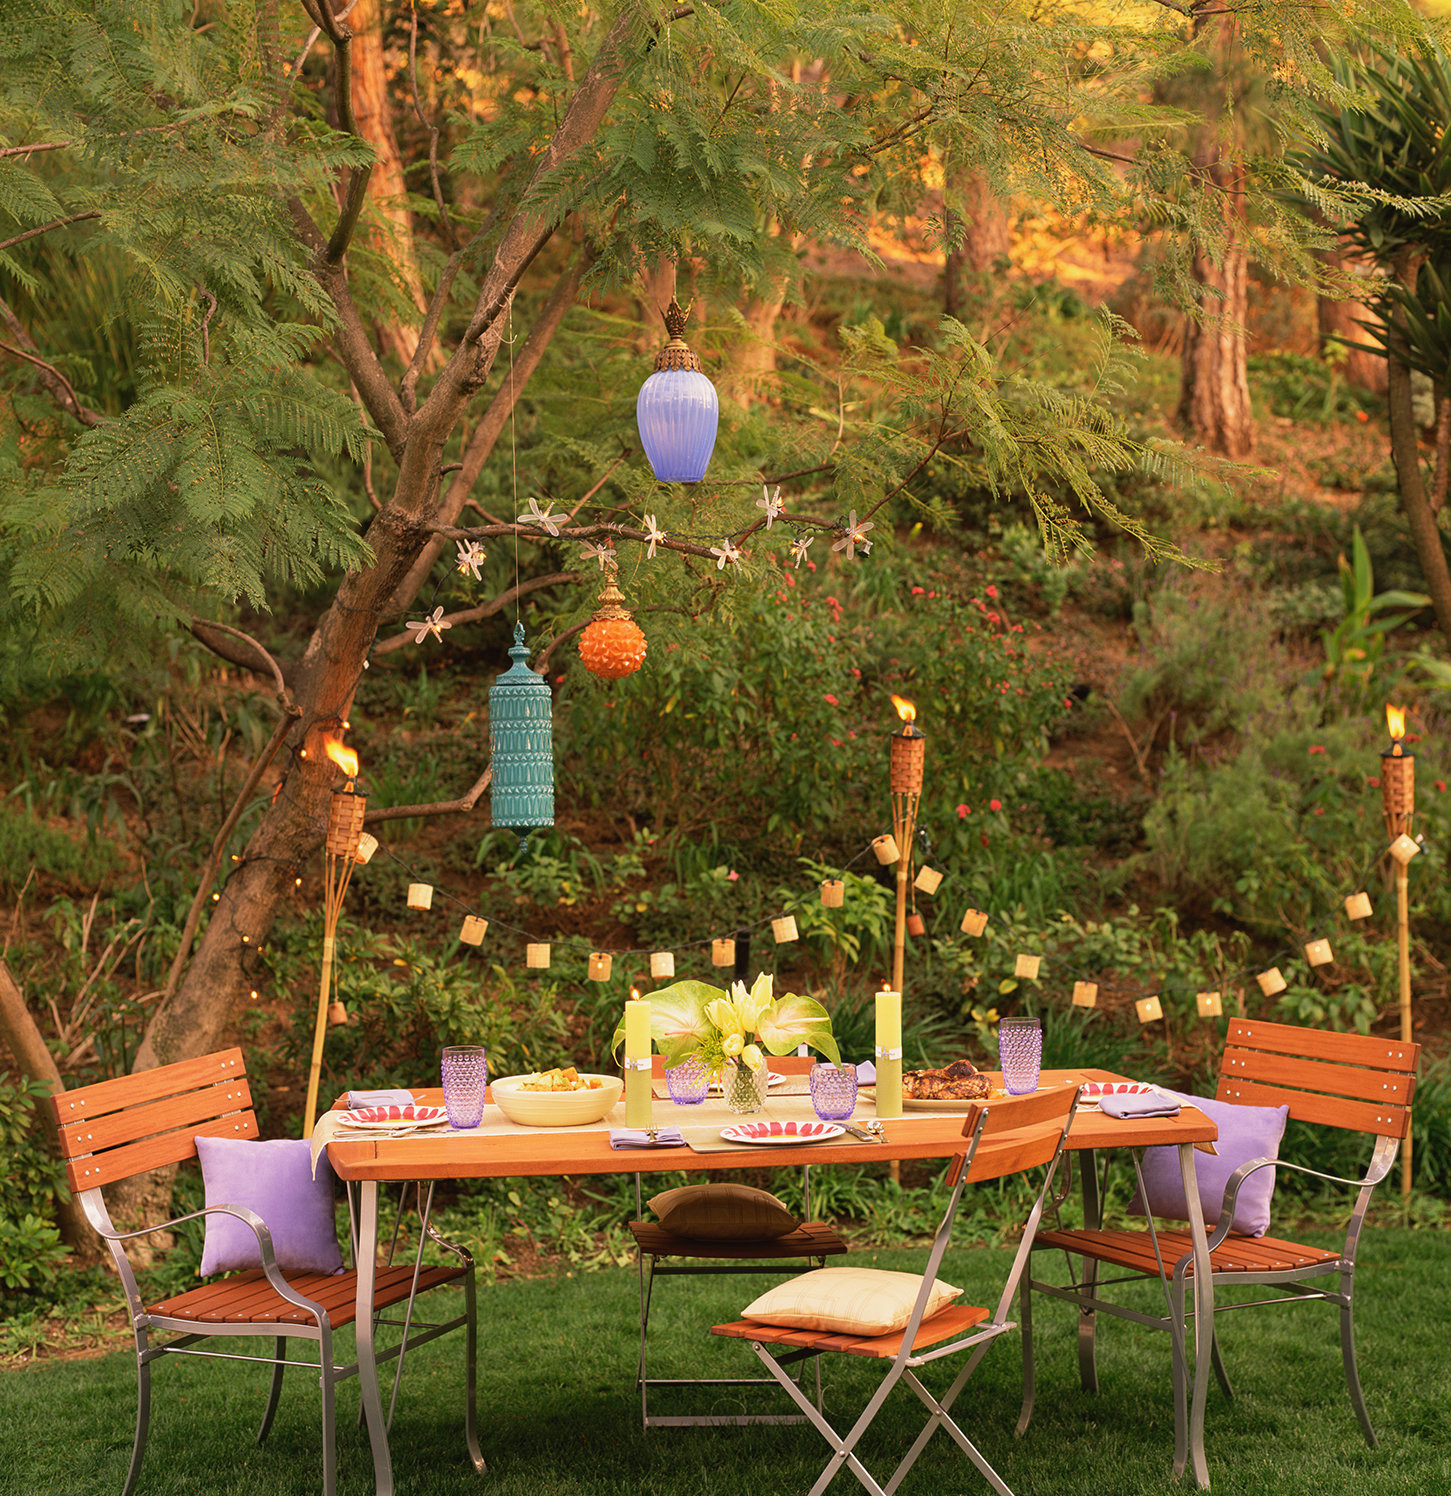 Backyard Birthday Party Ideas
 17 Outdoor Party Ideas for an Effortless Backyard